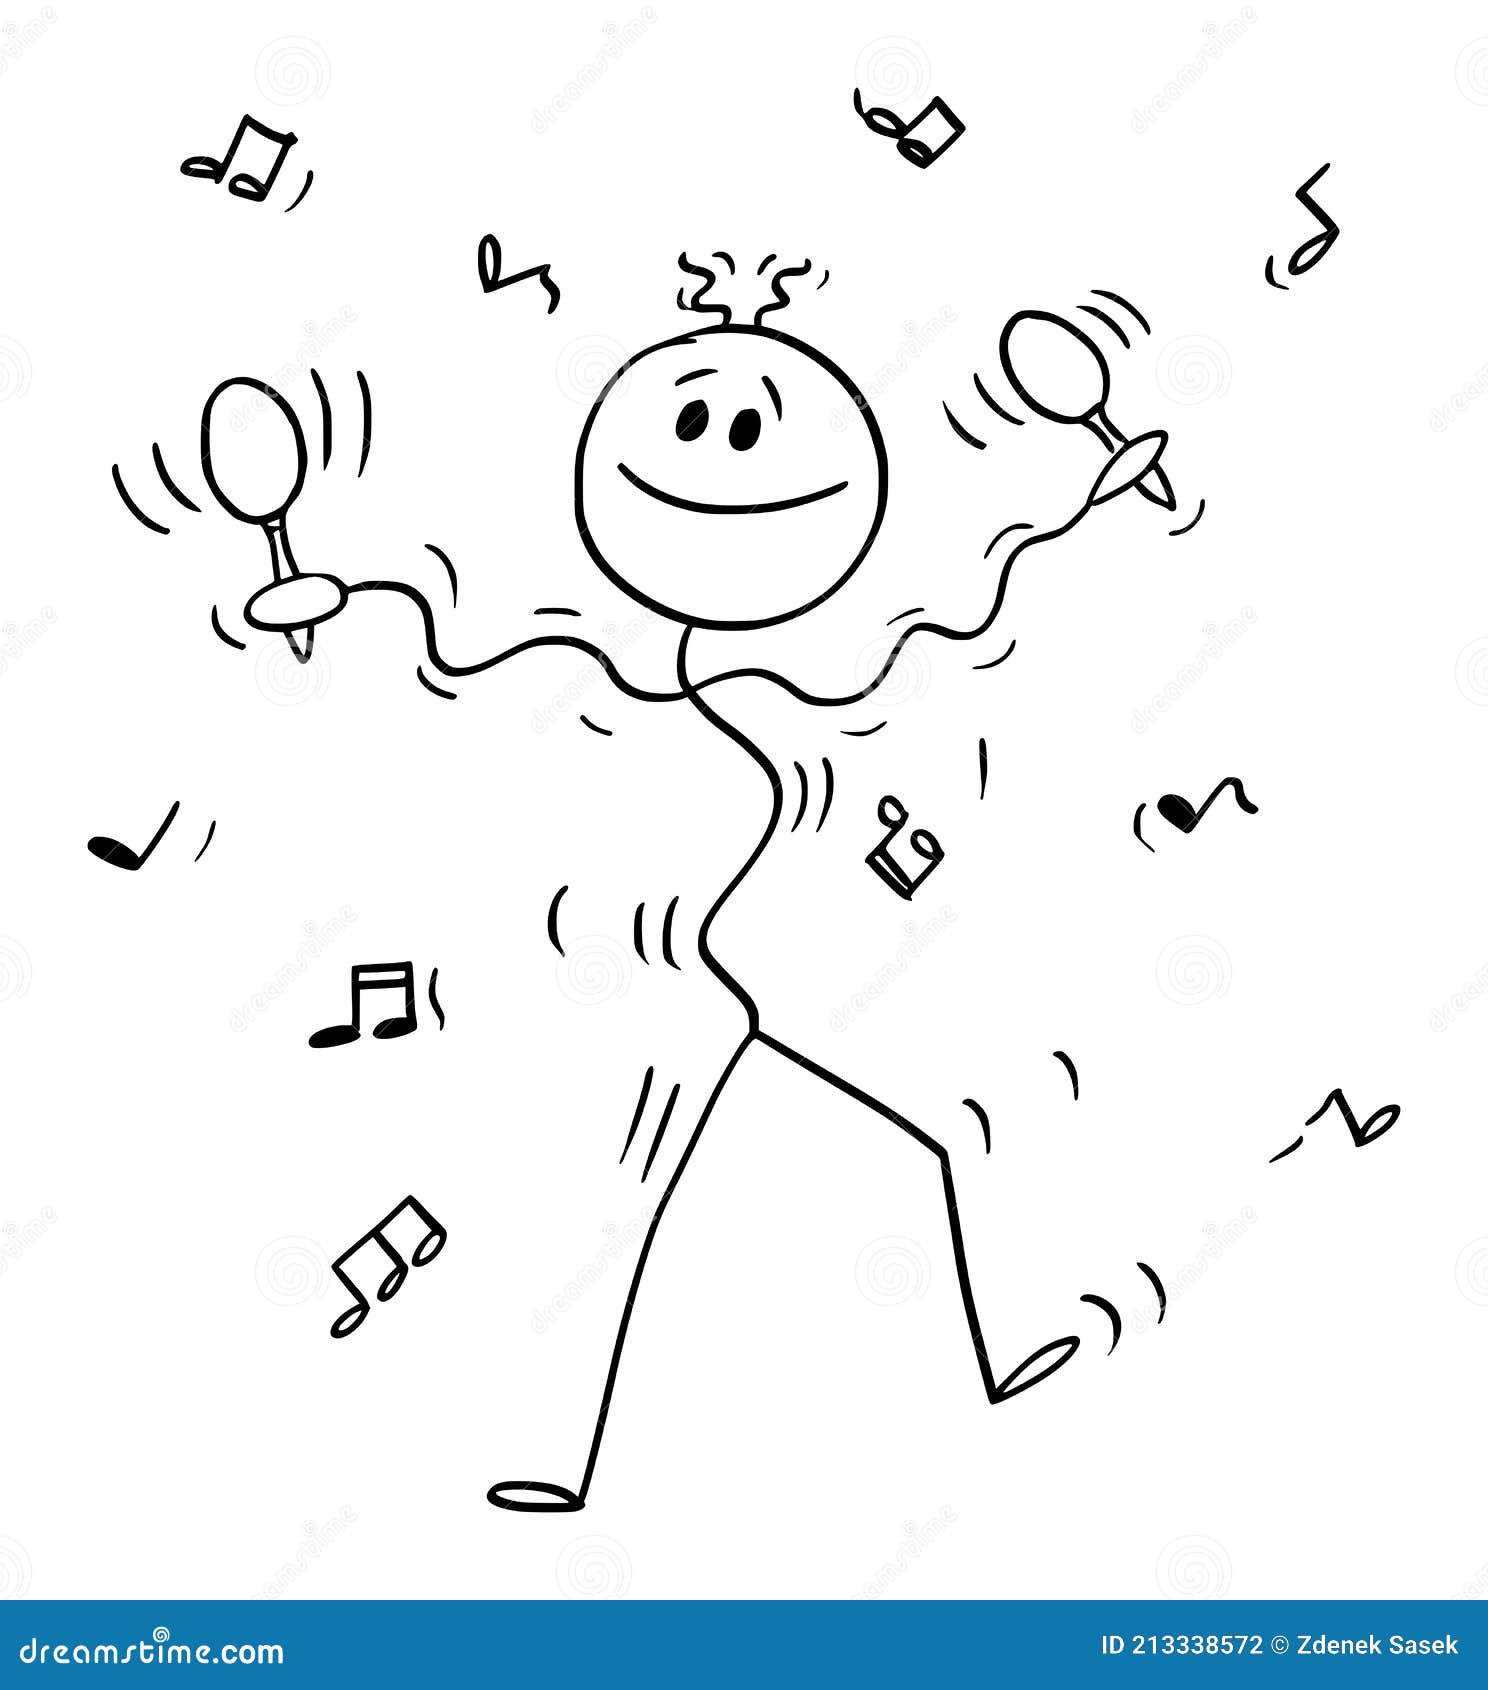 dancing musician performing music with maraca or rumba shaker,  cartoon stick figure 